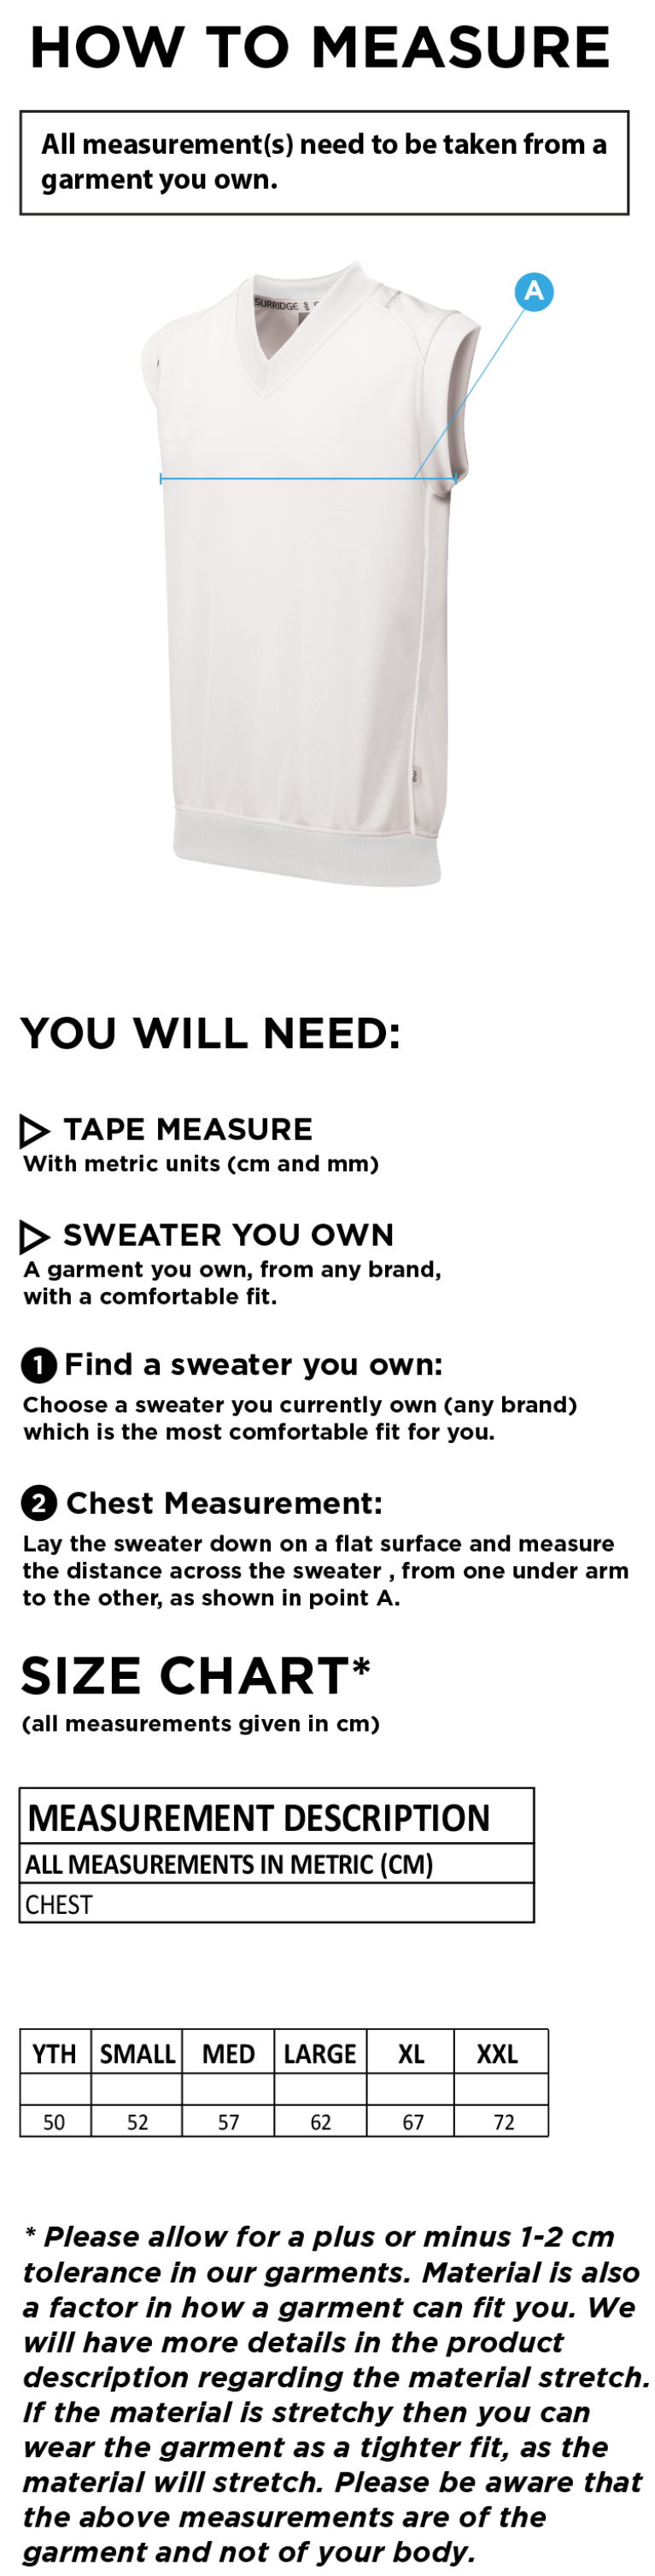 Westcott Cricket Club - Sleeveless Sweater - Size Guide